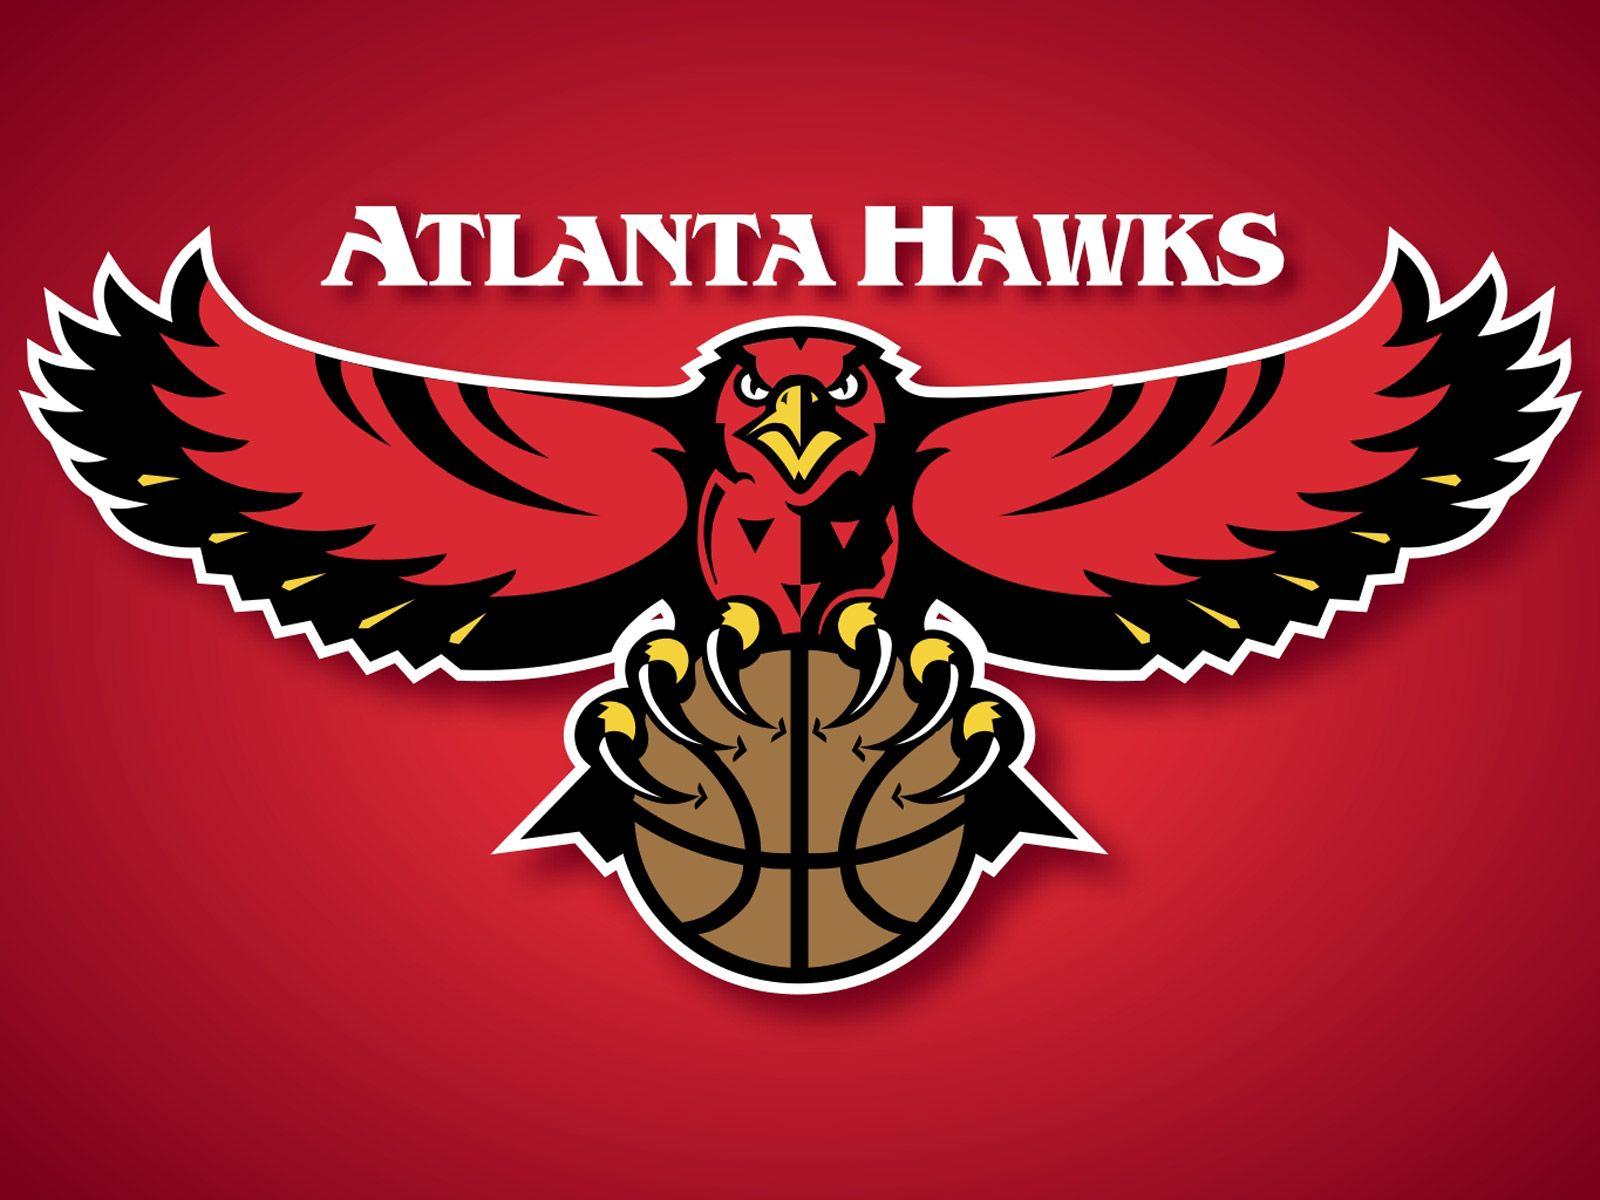 Atlanta Hawks vs. Washington Wizards Tickets, Atlanta, Georgia, United States